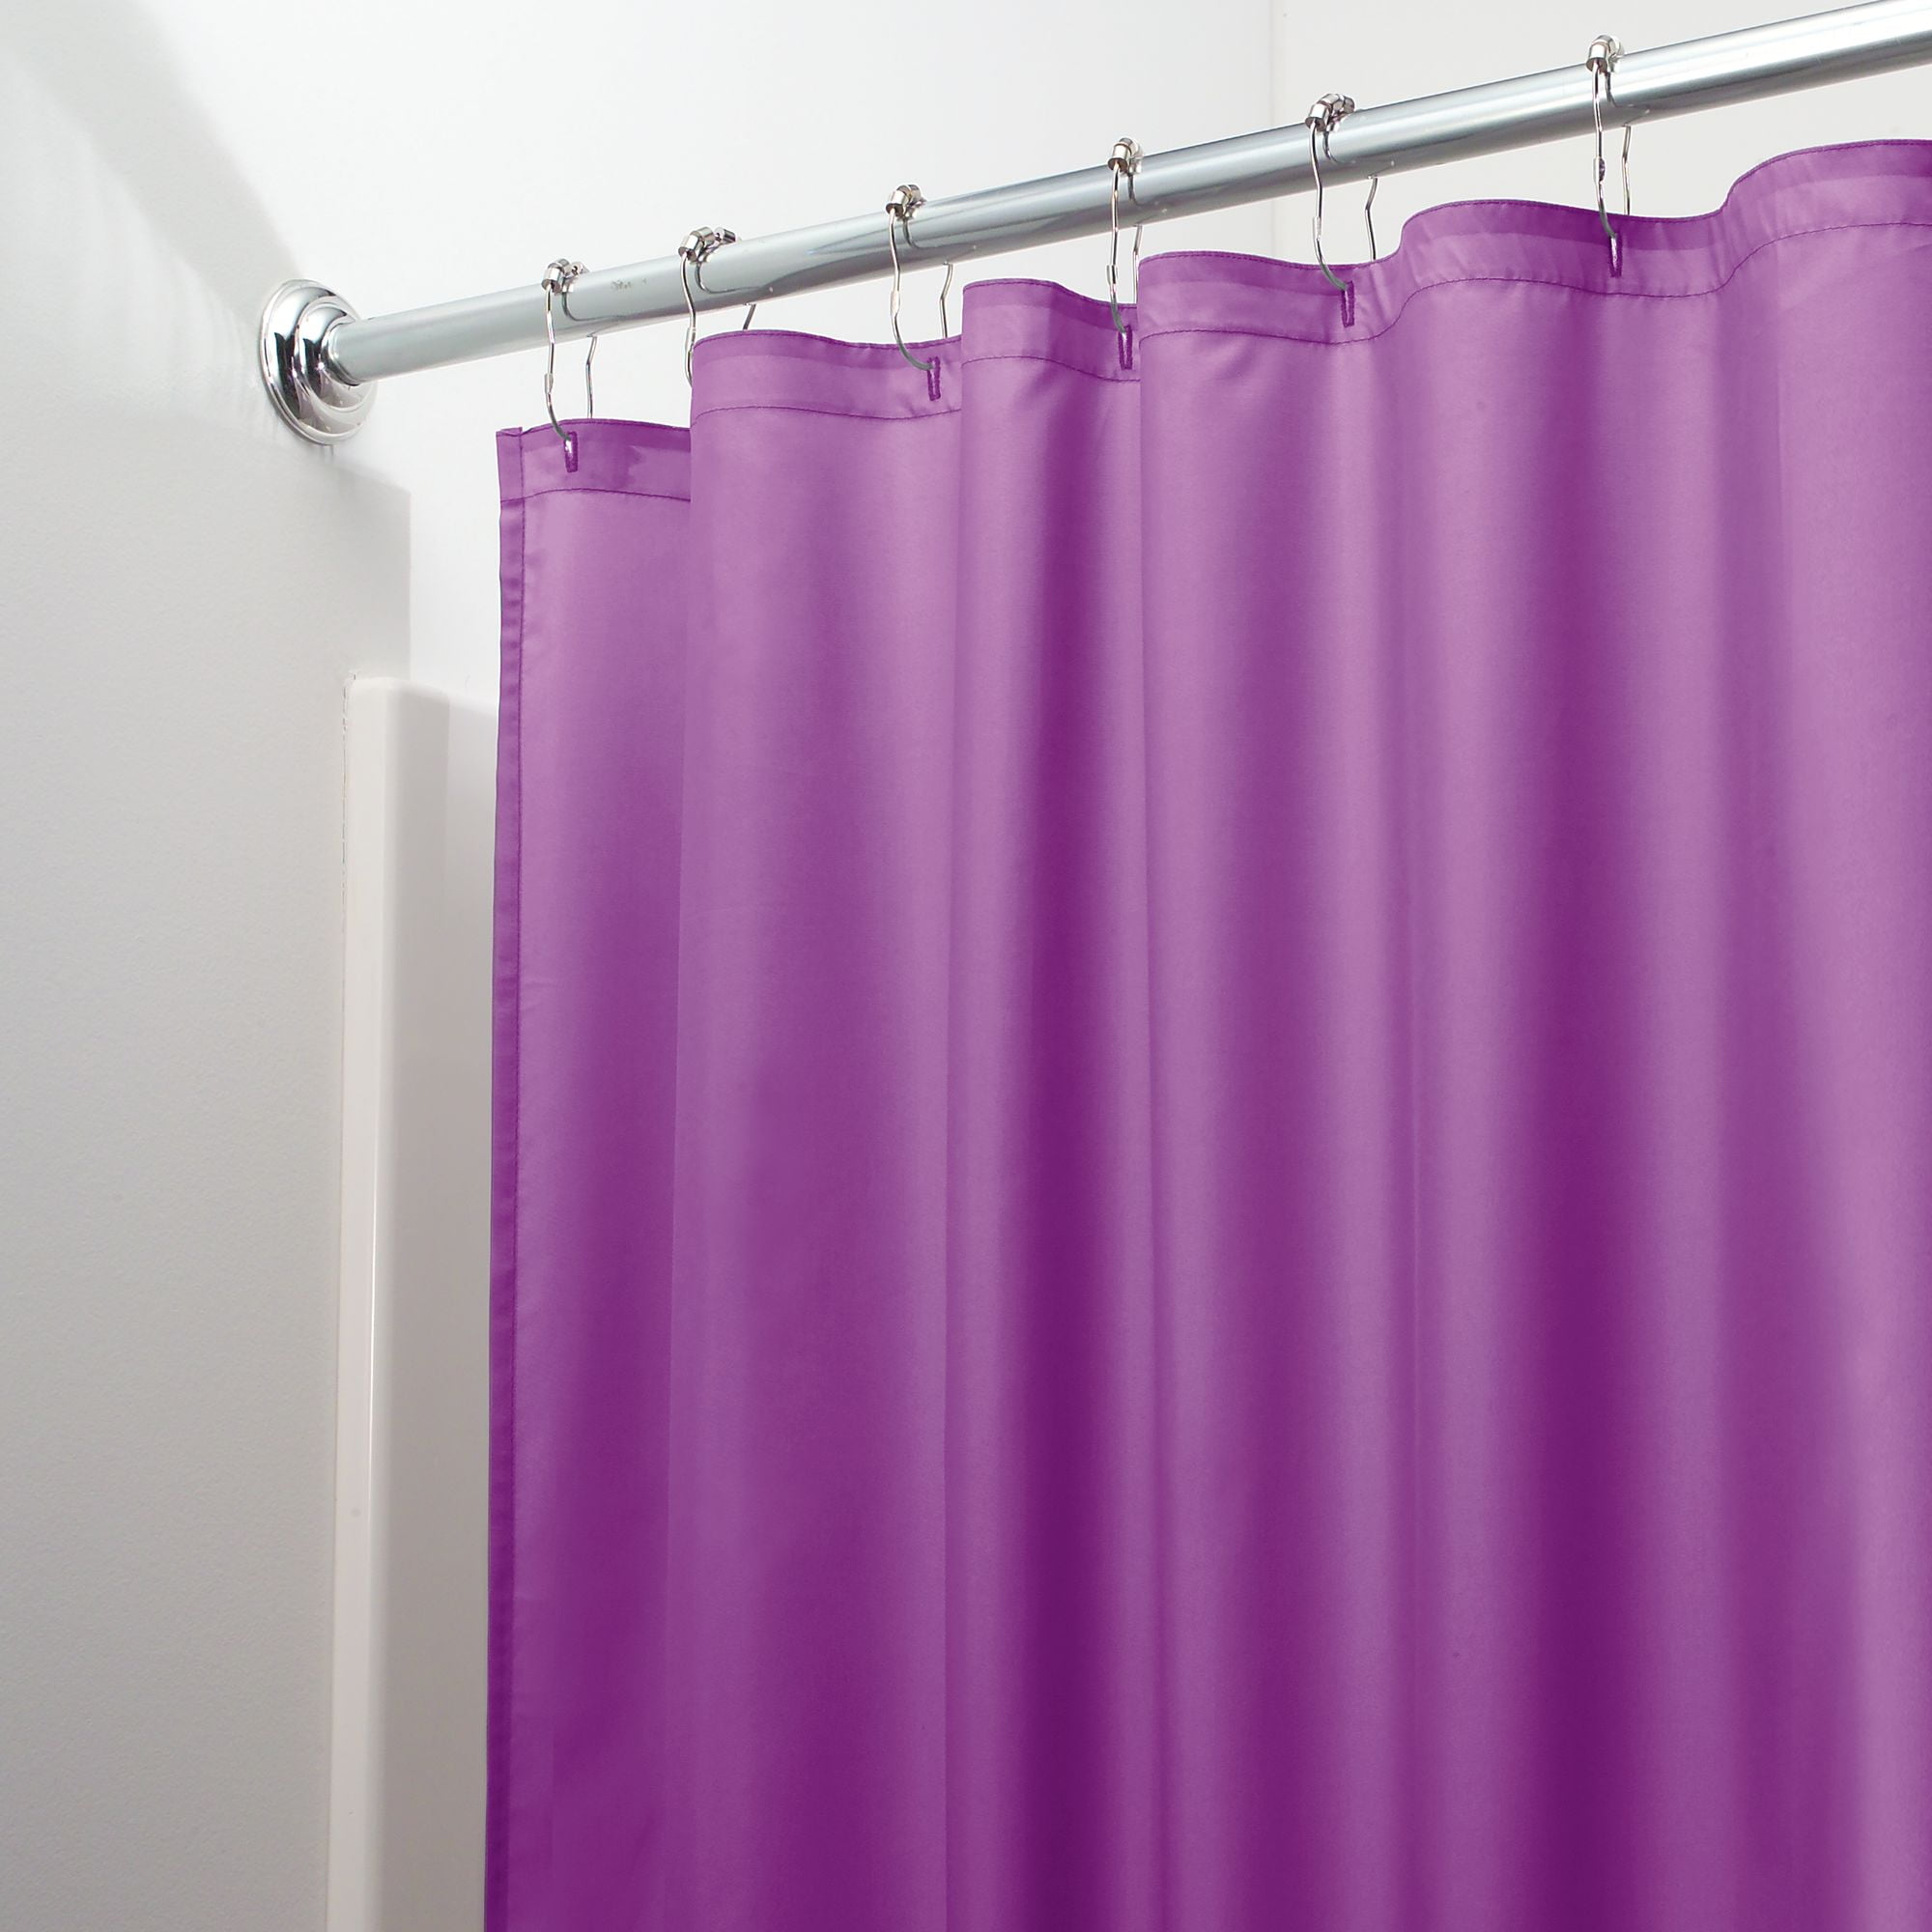 Interdesign Waterproof Fabric Shower Curtain Liner 72 X